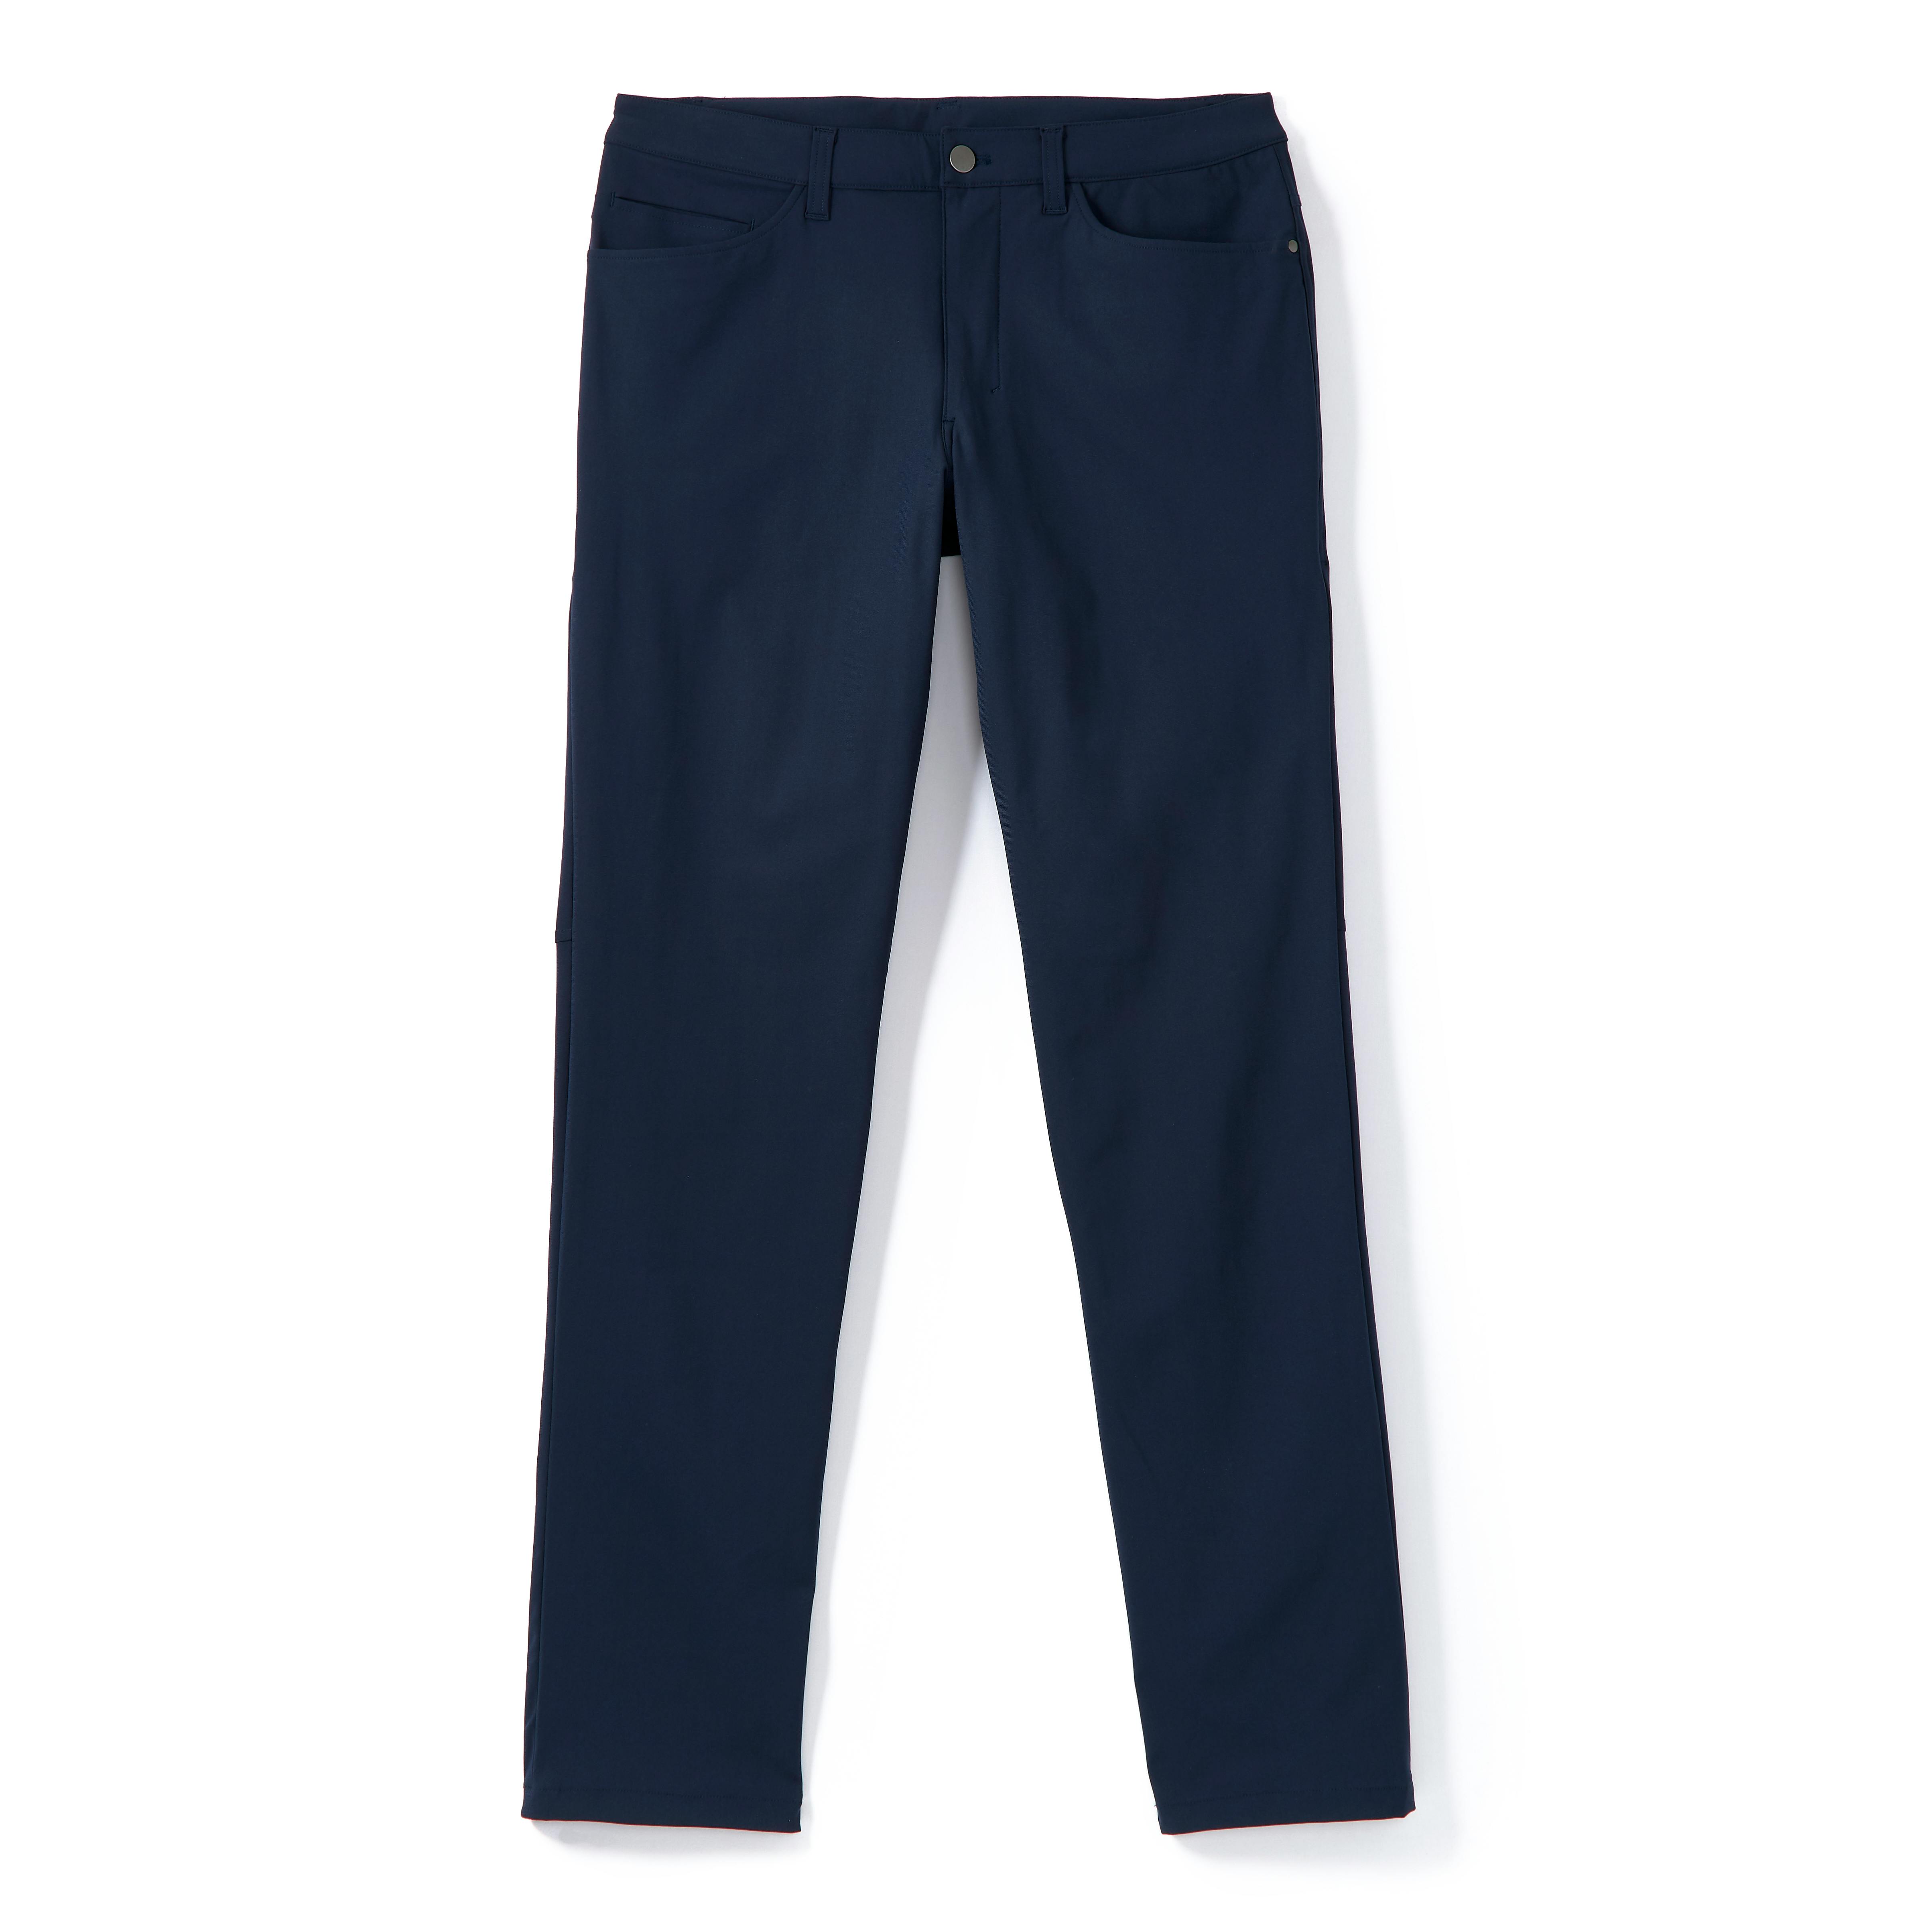 lululemon ABC Pant - Classic Fit - True Navy, Clothing